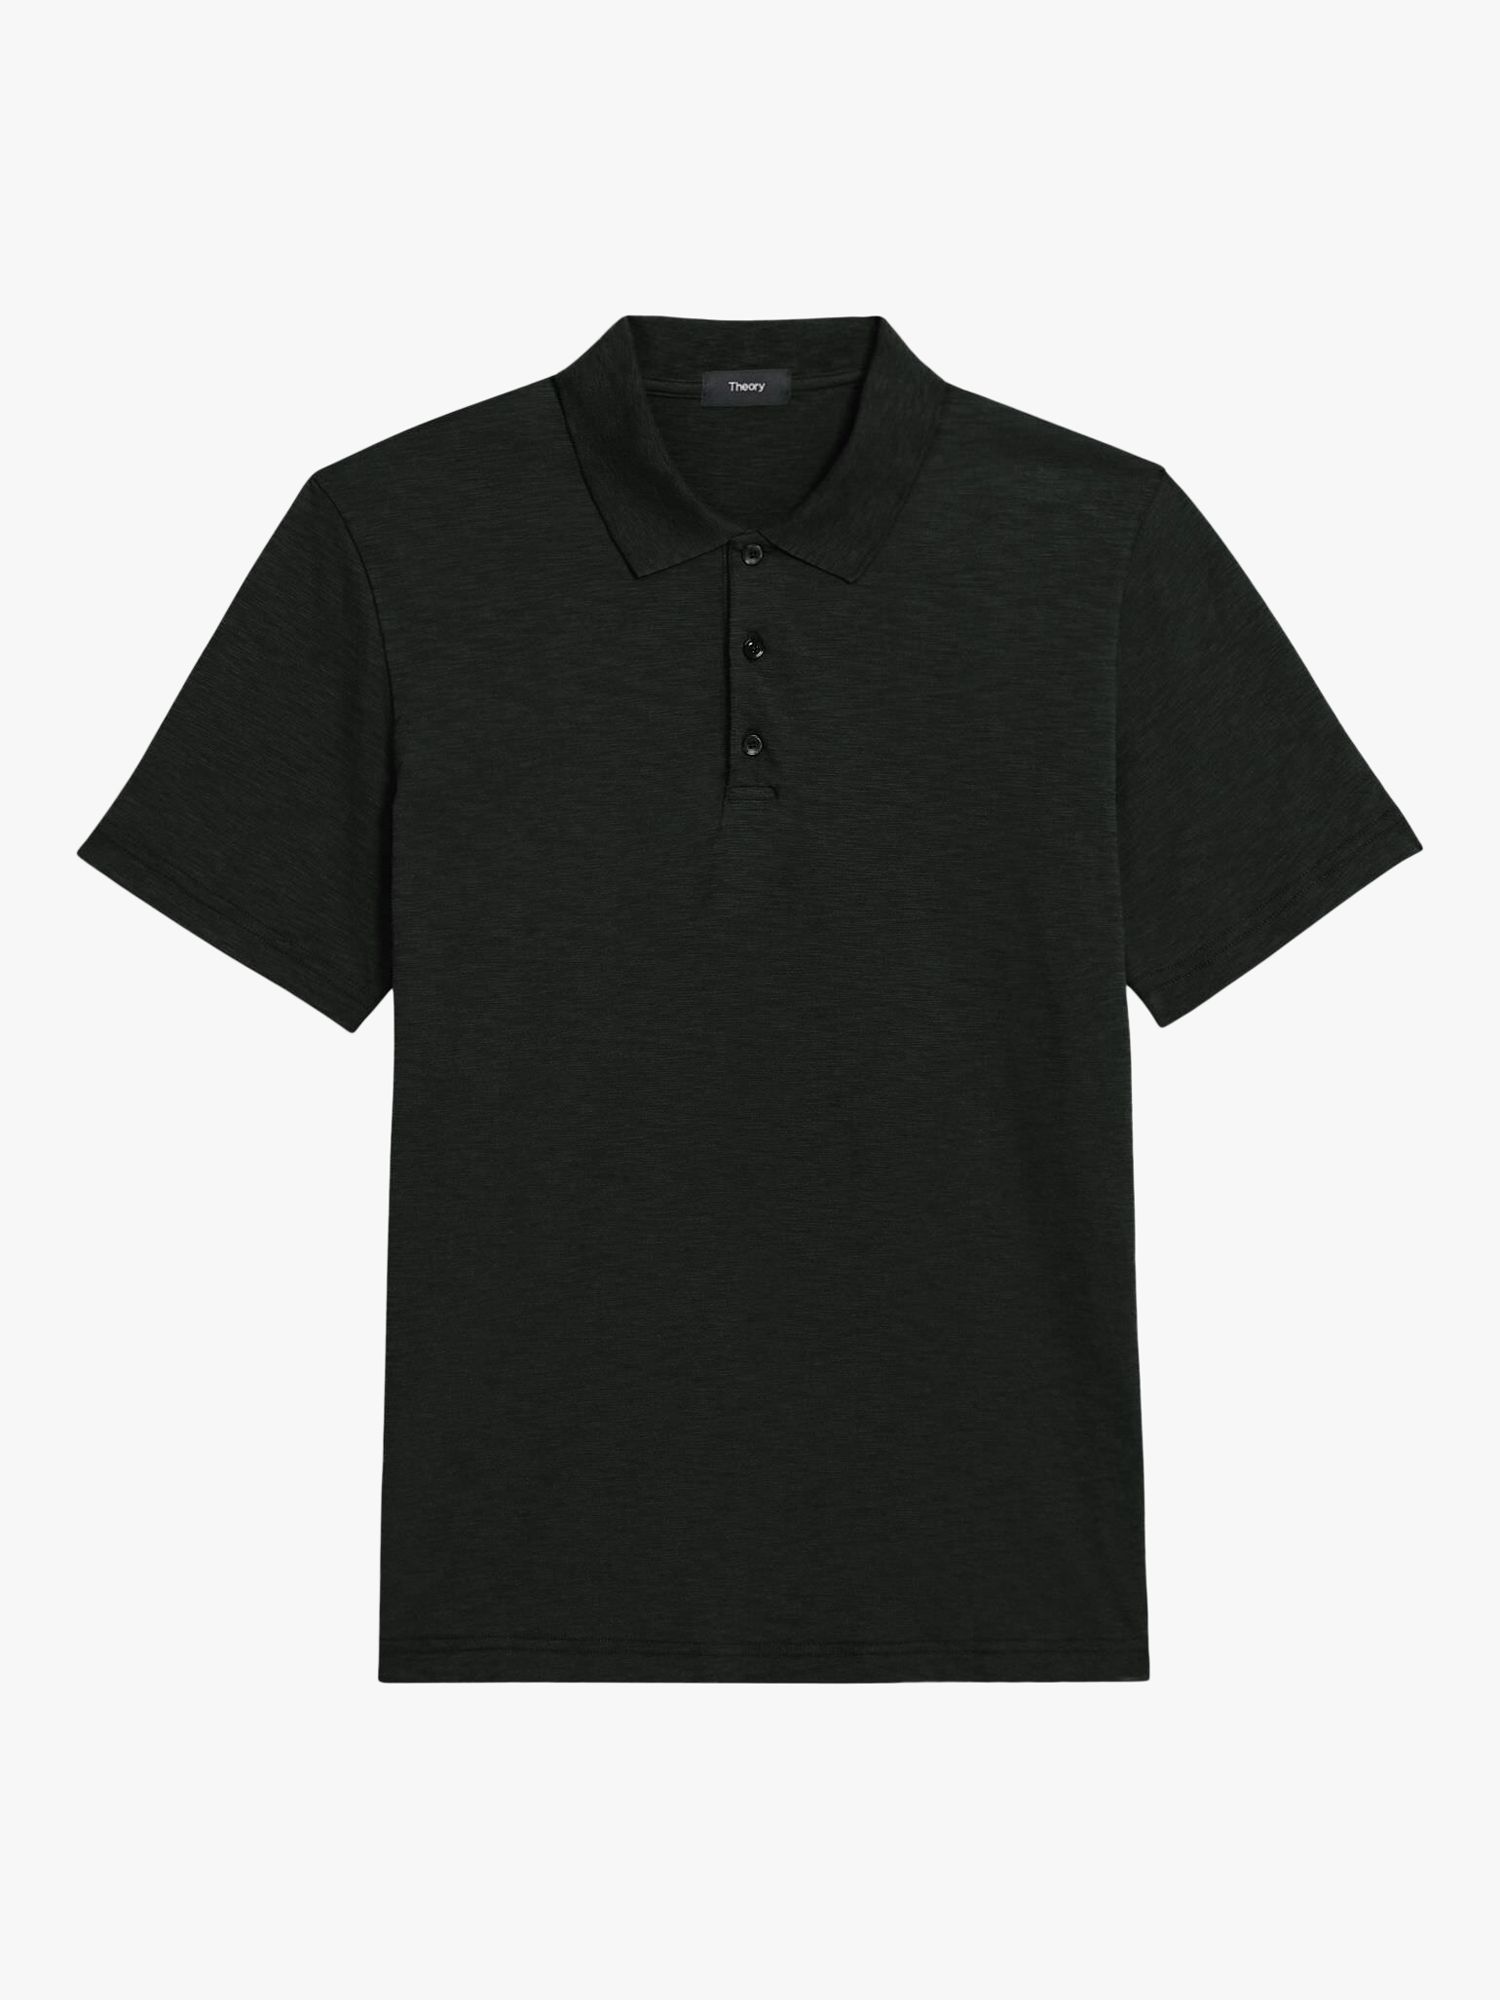 Theory Bron Cosmos Slub Cotton Polo Shirt, Black, S